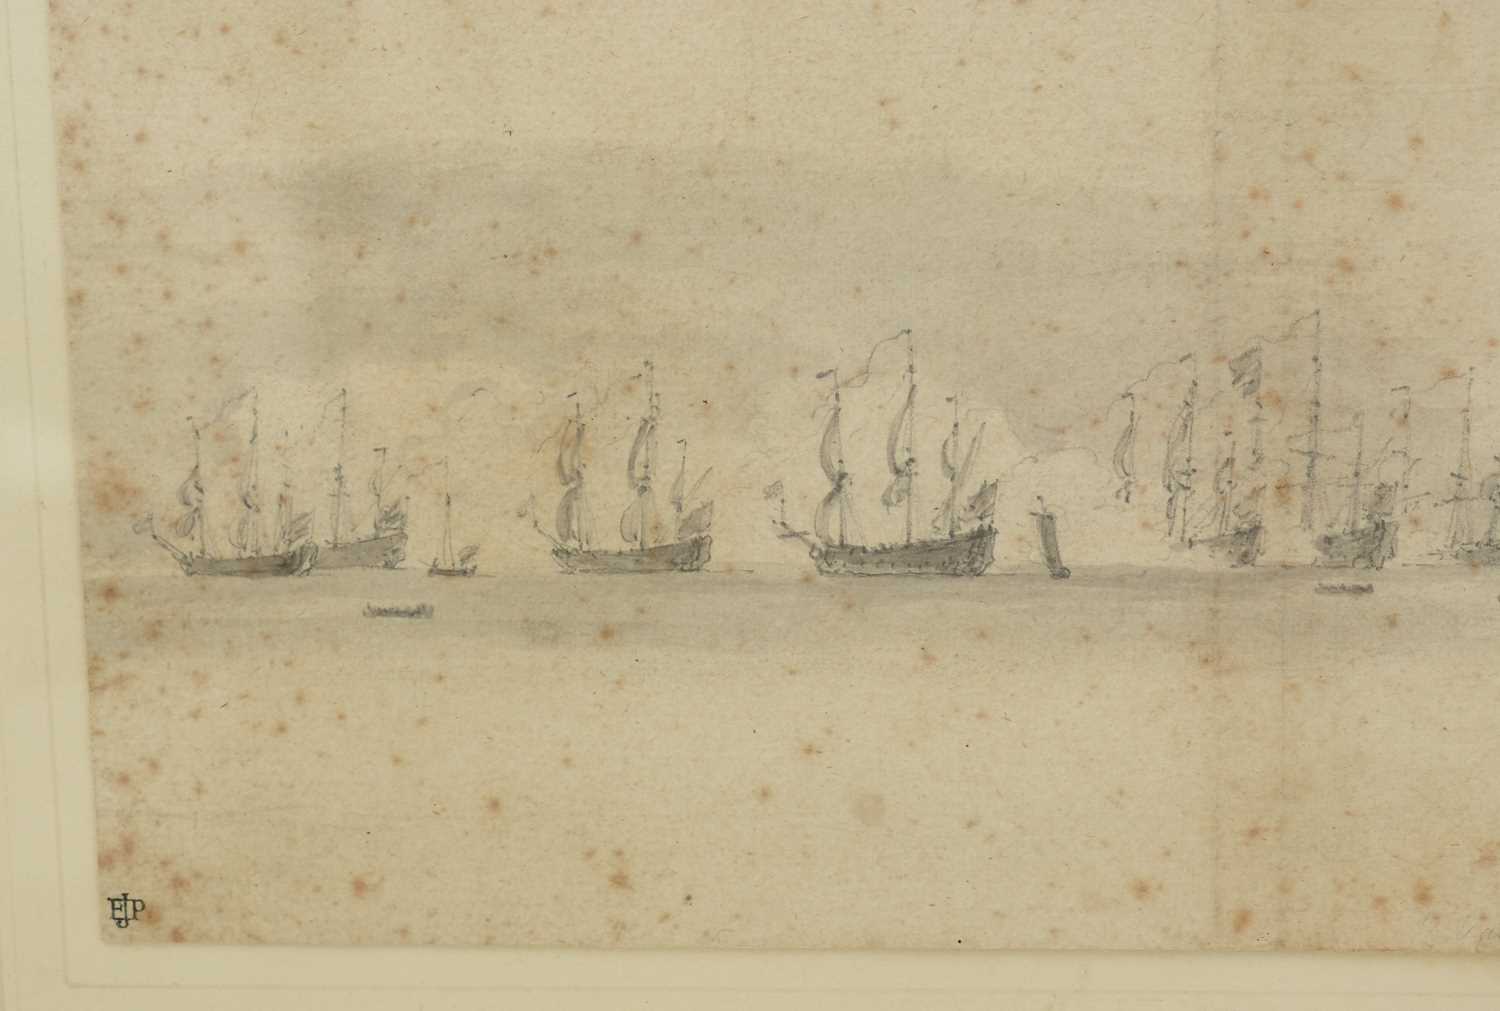 Willem Van de Velde, The Younger - The Dutch Fleet in the Thames | pencil - Image 6 of 16